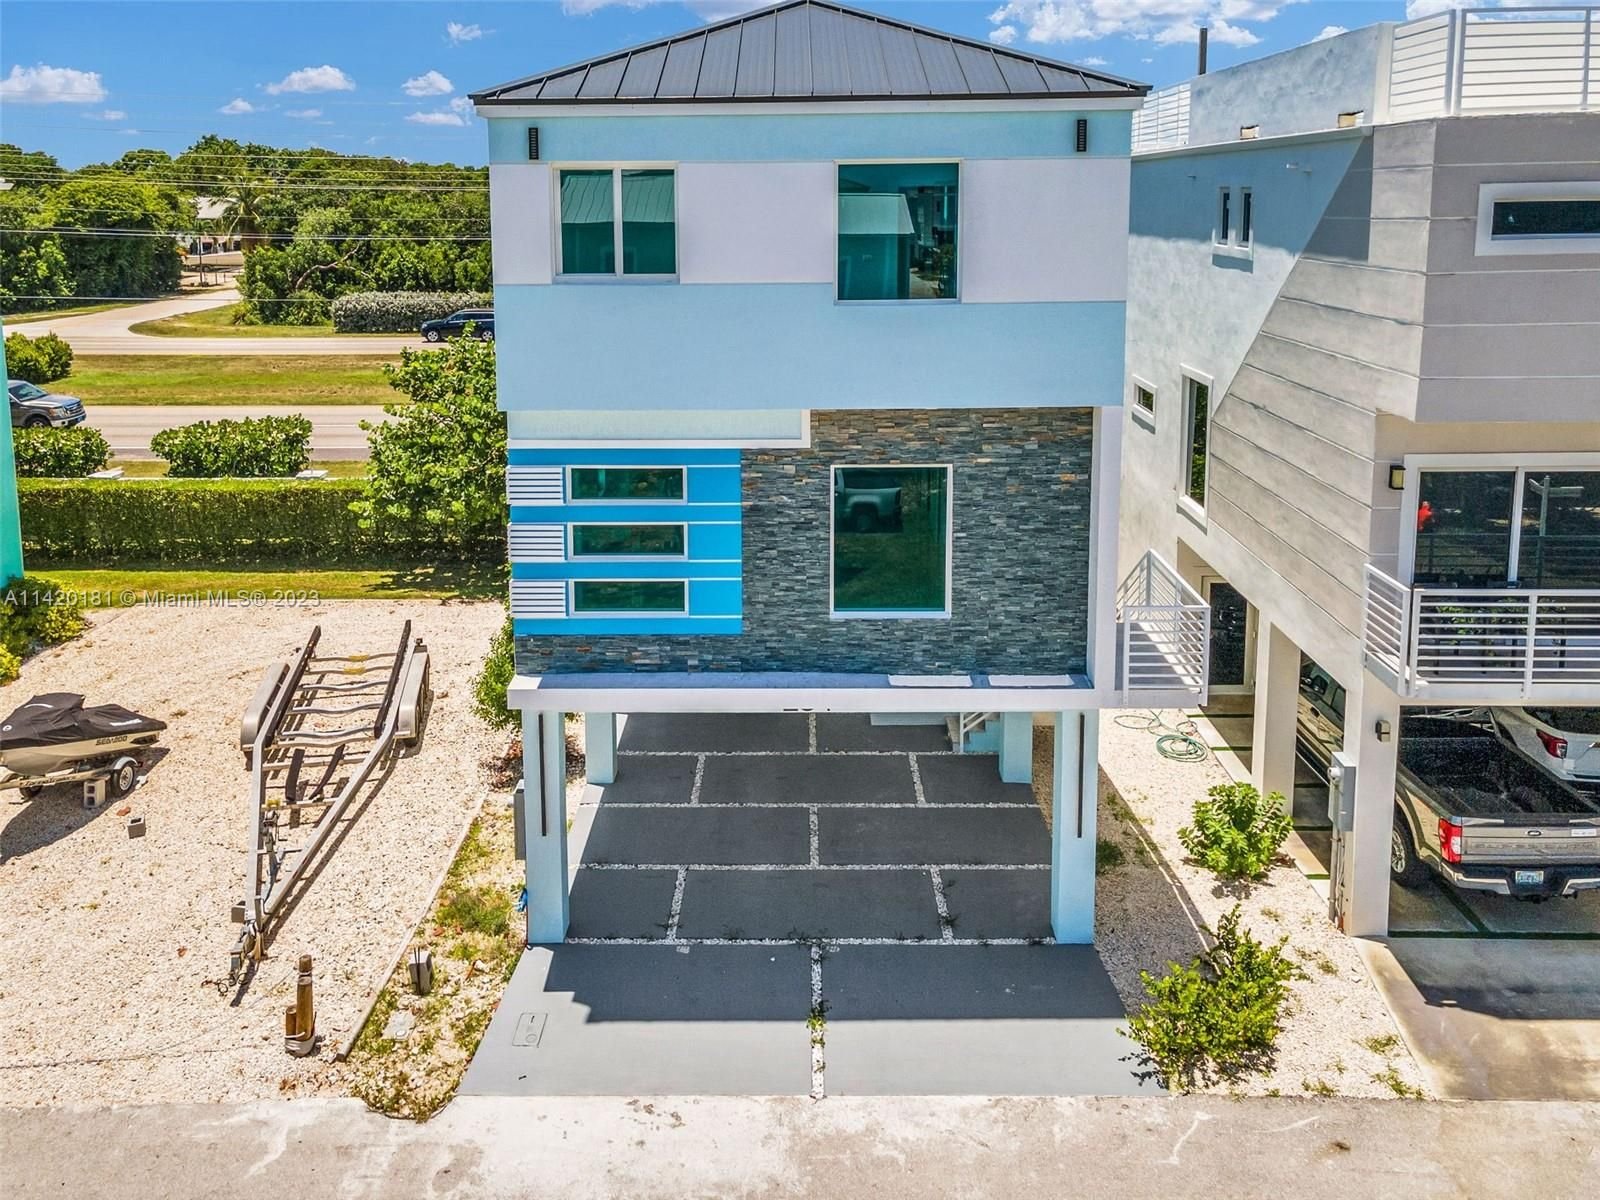 Real estate property located at 94825 Overseas, Monroe County, KEY LARGO OCEAN RESORT CO, Key Largo, FL